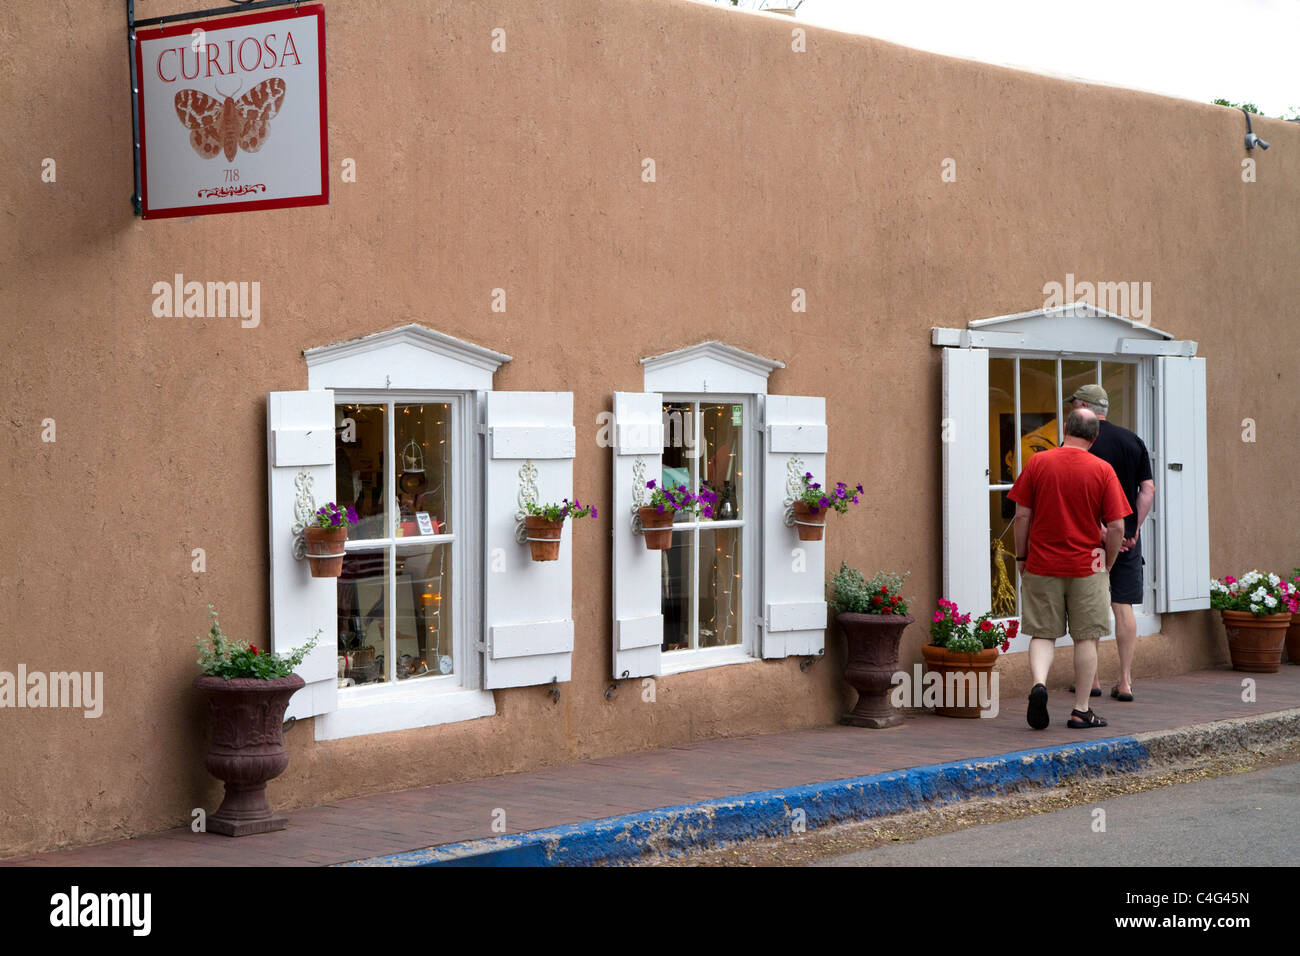 Curiosa gift shop along Canyon Road in Santa Fe, New Mexico, USA. Stock Photo